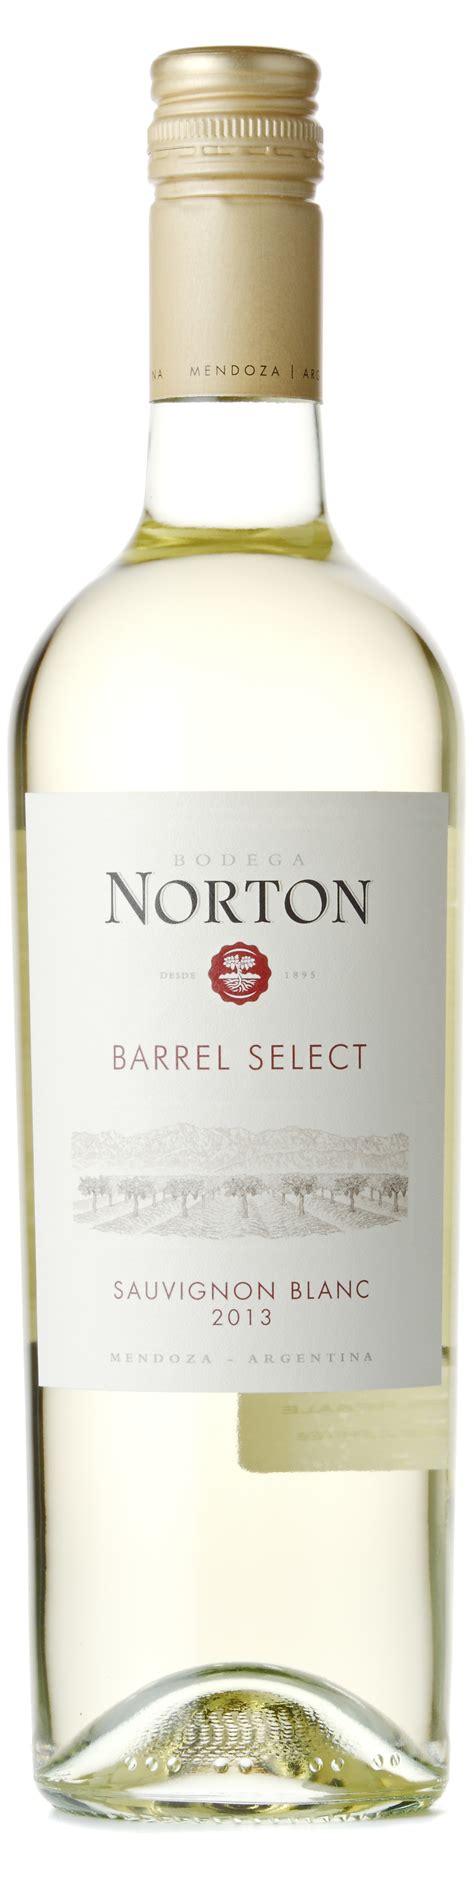 Norton Barrel Select Sauvignon Blanc 2013 Expert Wine Ratings And